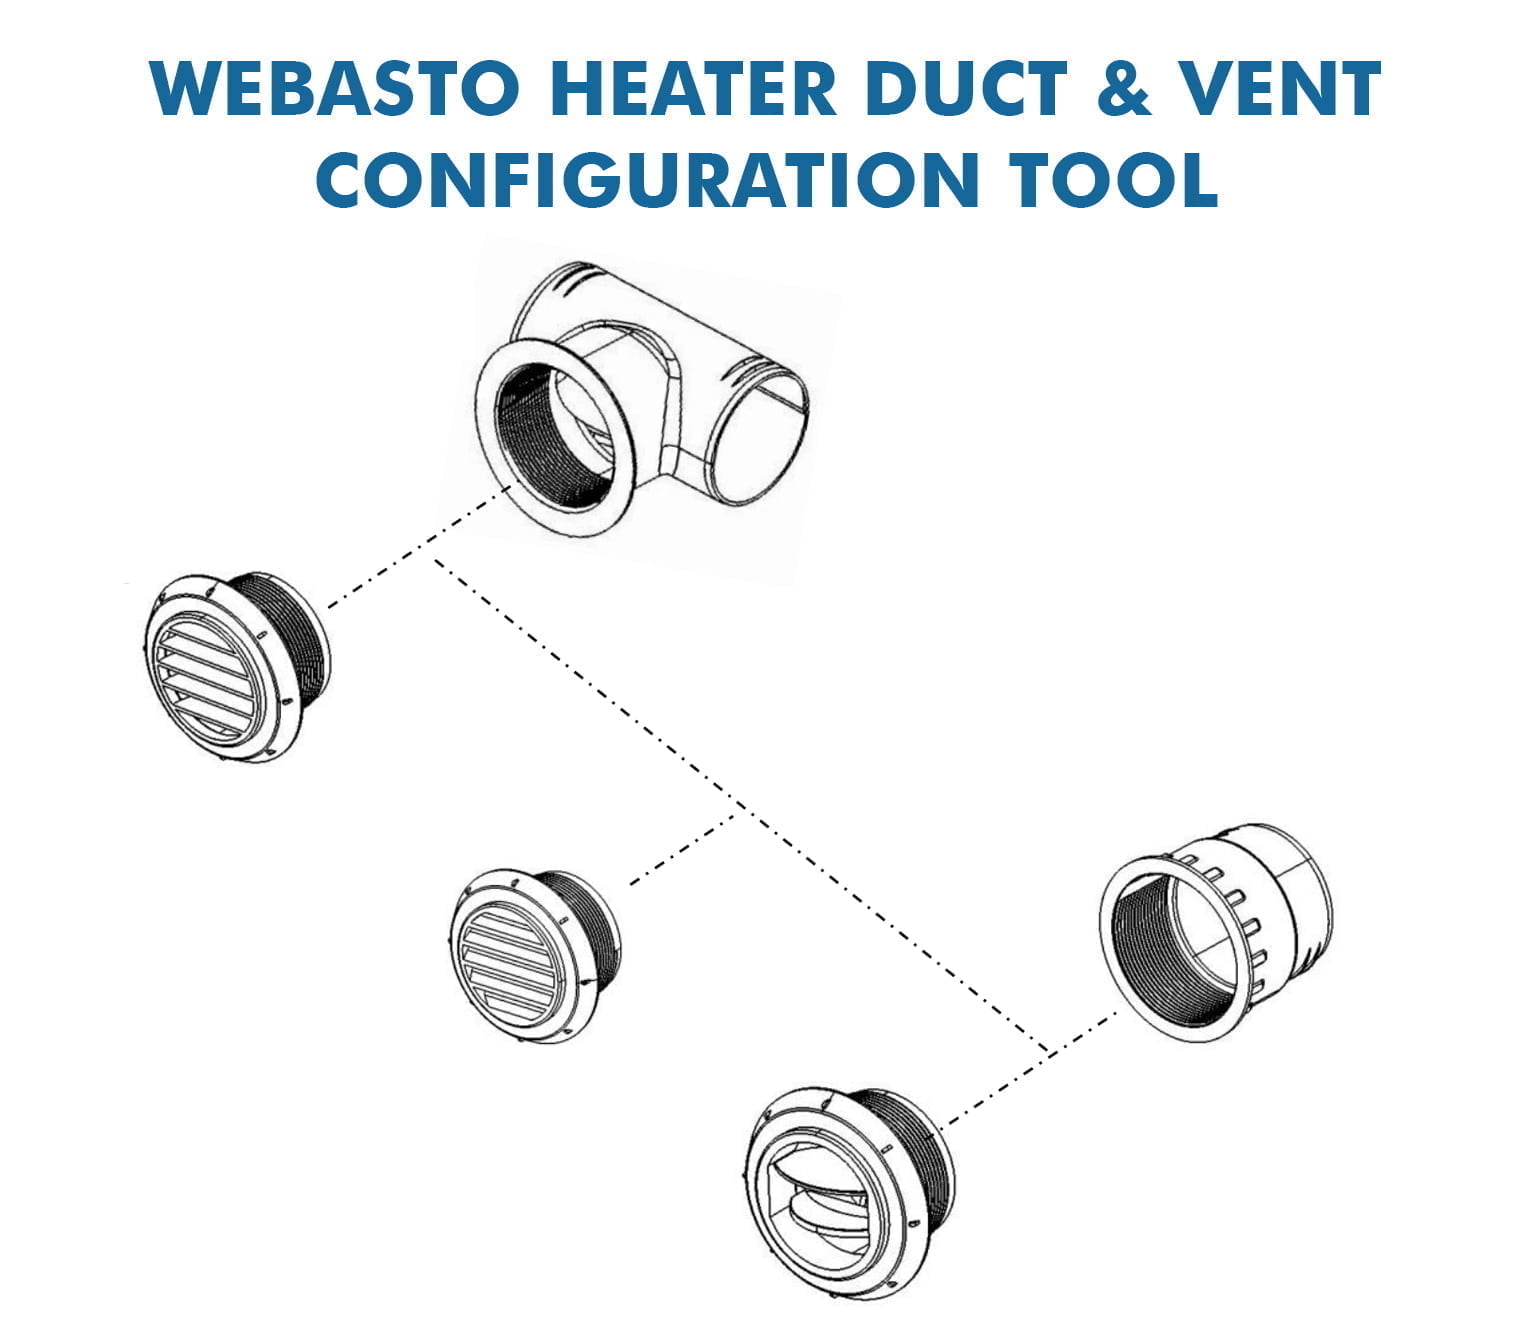 https://www.vanlifeoutfitters.com/wp-content/uploads/2021/12/webasto-heater-ducting-vent-configuration-tool.jpg